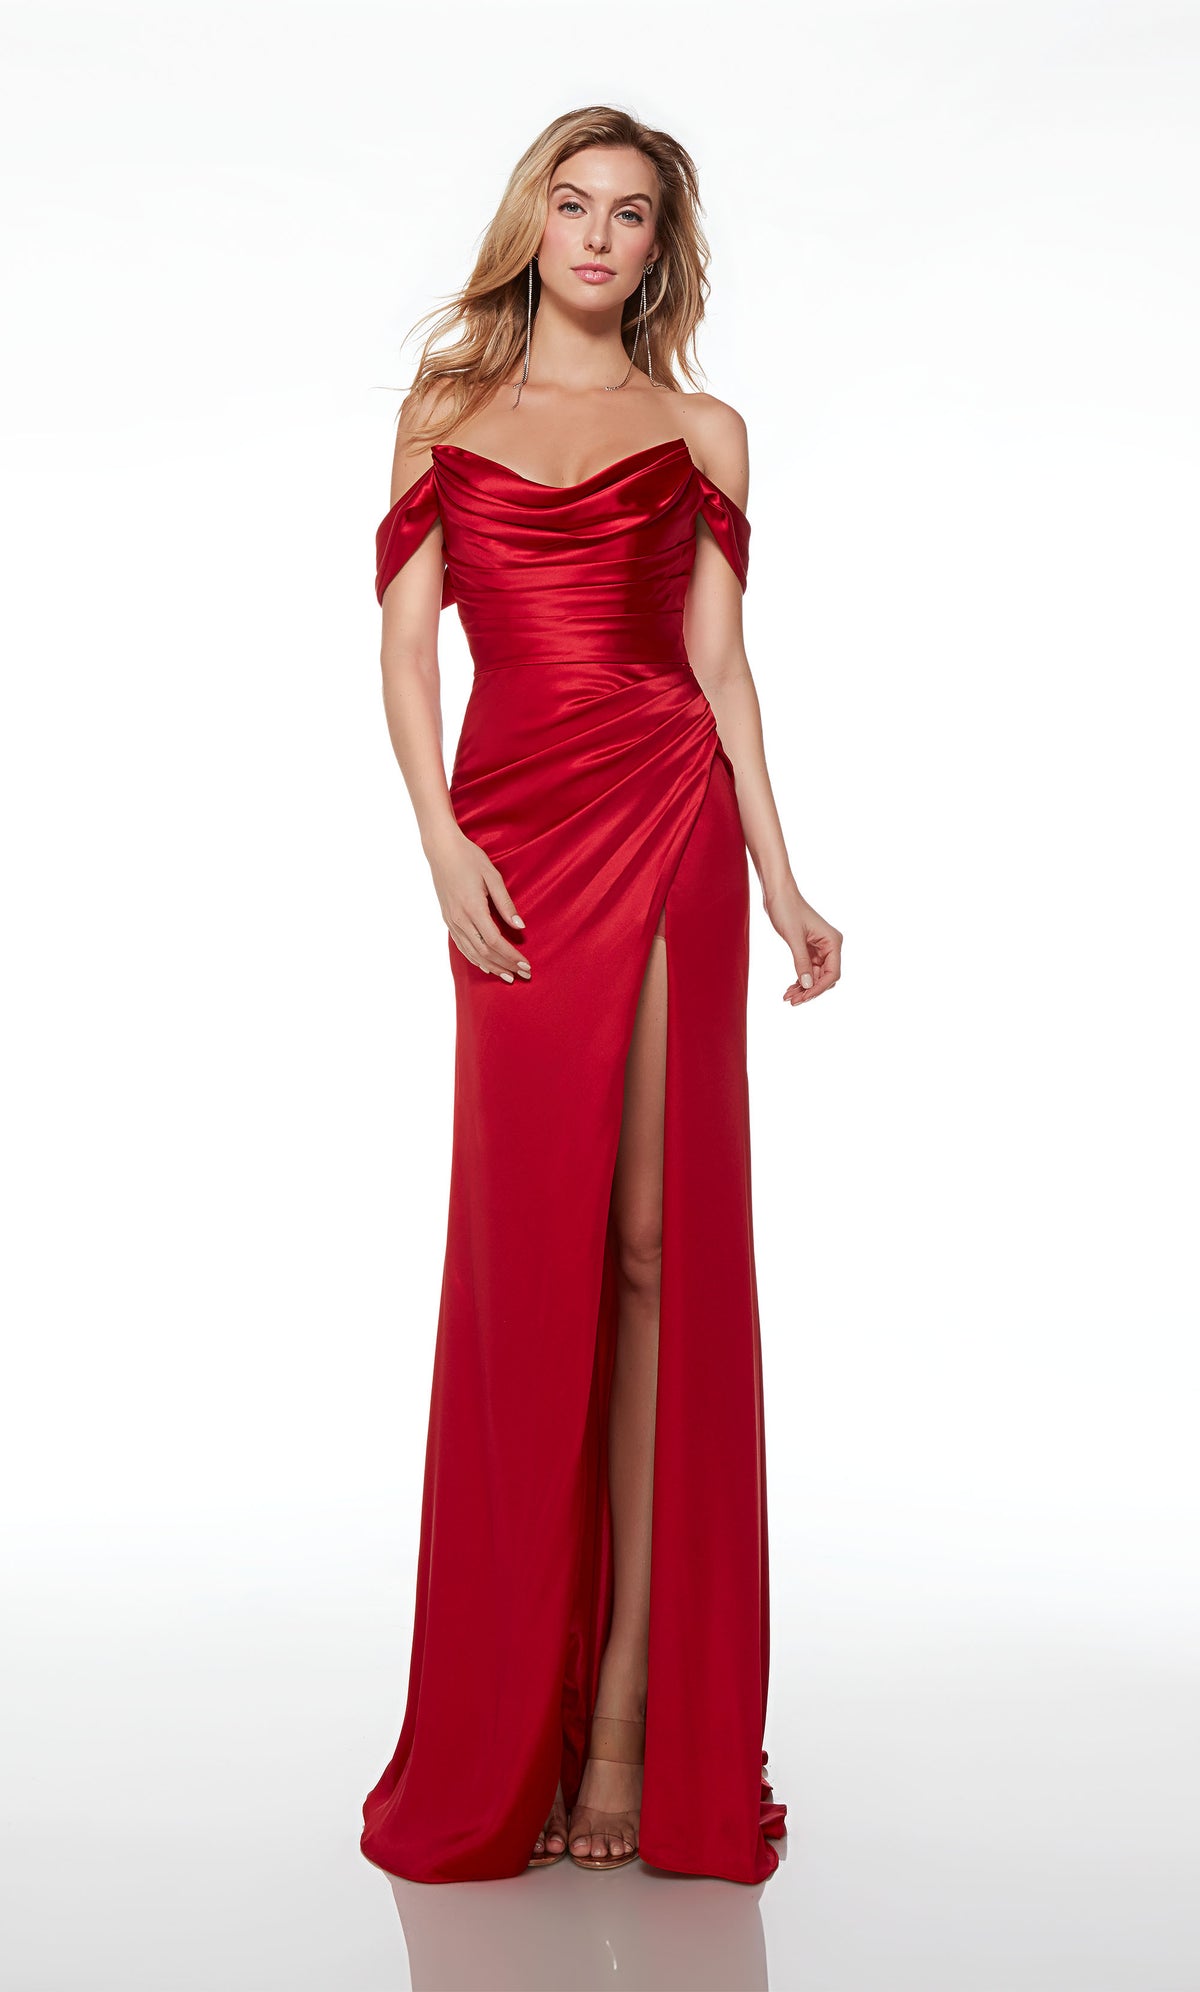 Red satin off-shoulder prom dress: cowl neckline, gathered bodice, slit, detachable straps, side train—an chic and versatile ensemble.